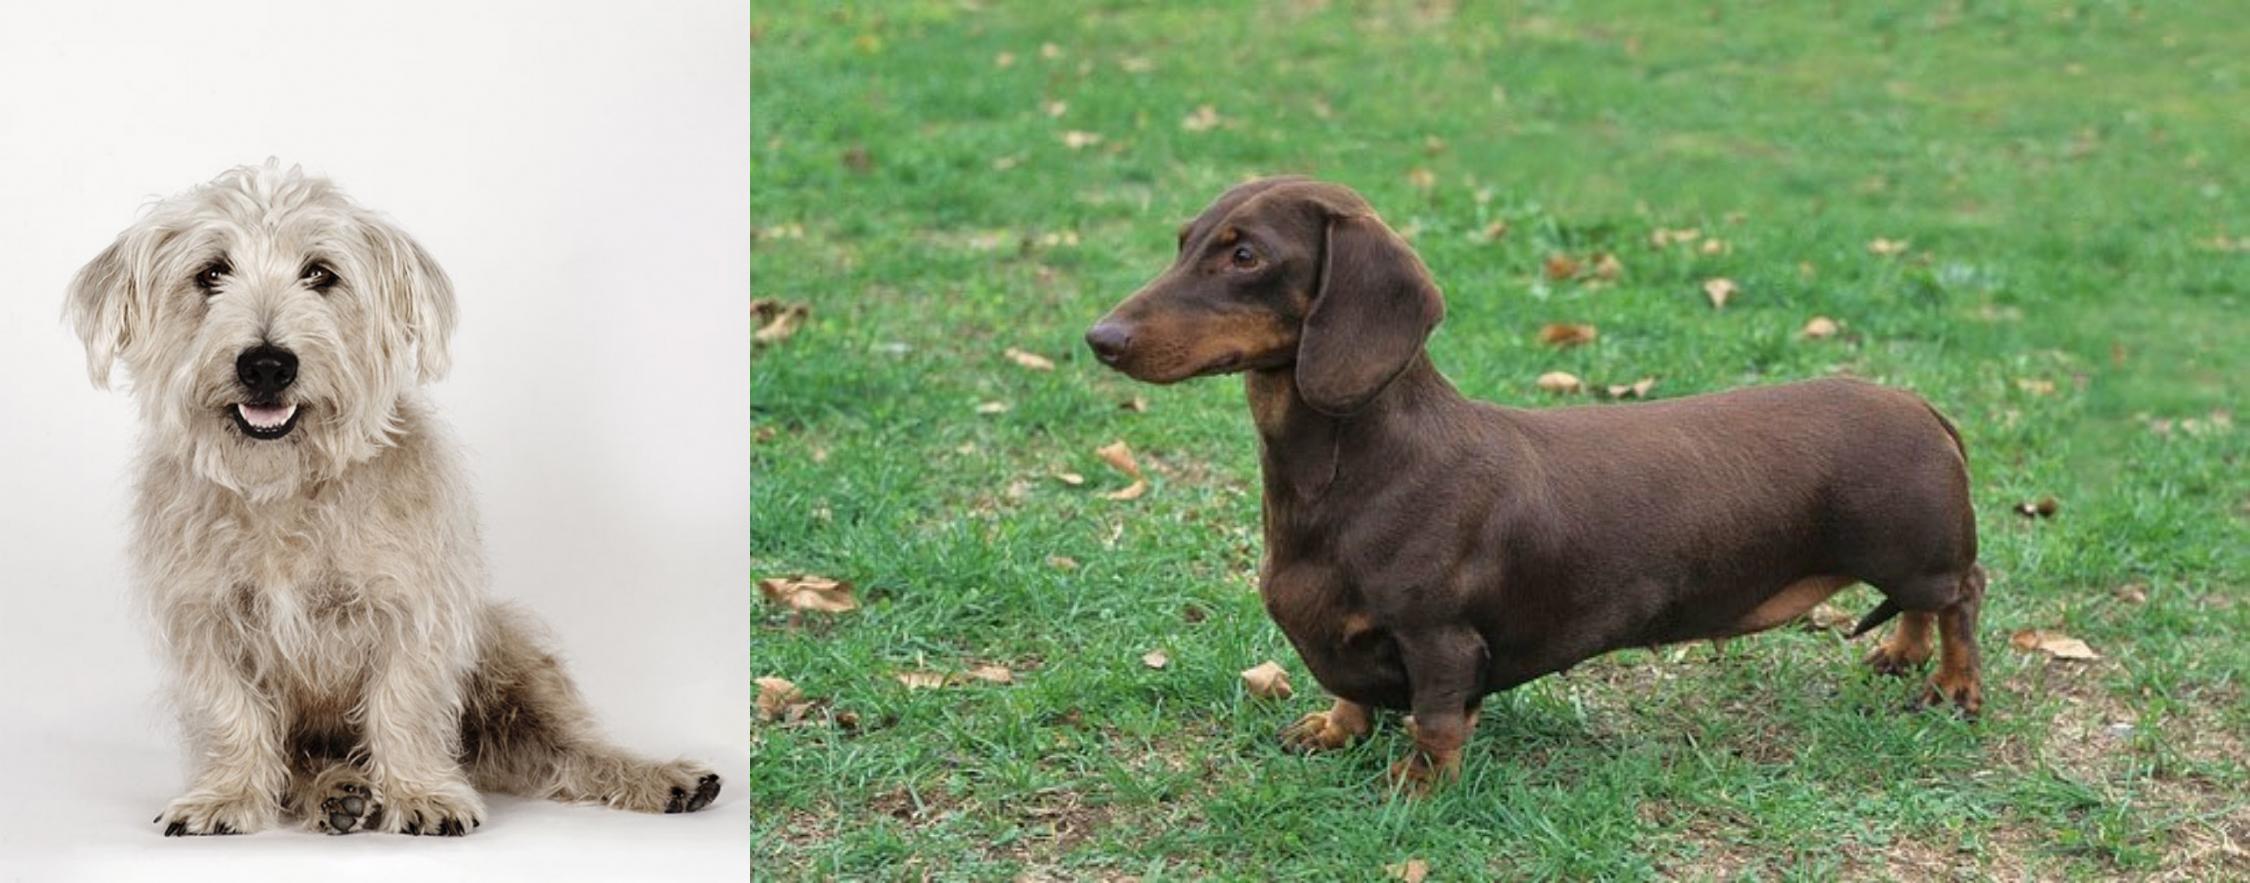 Glen Of Imaal Terrier Vs Dachshund Breed Comparison